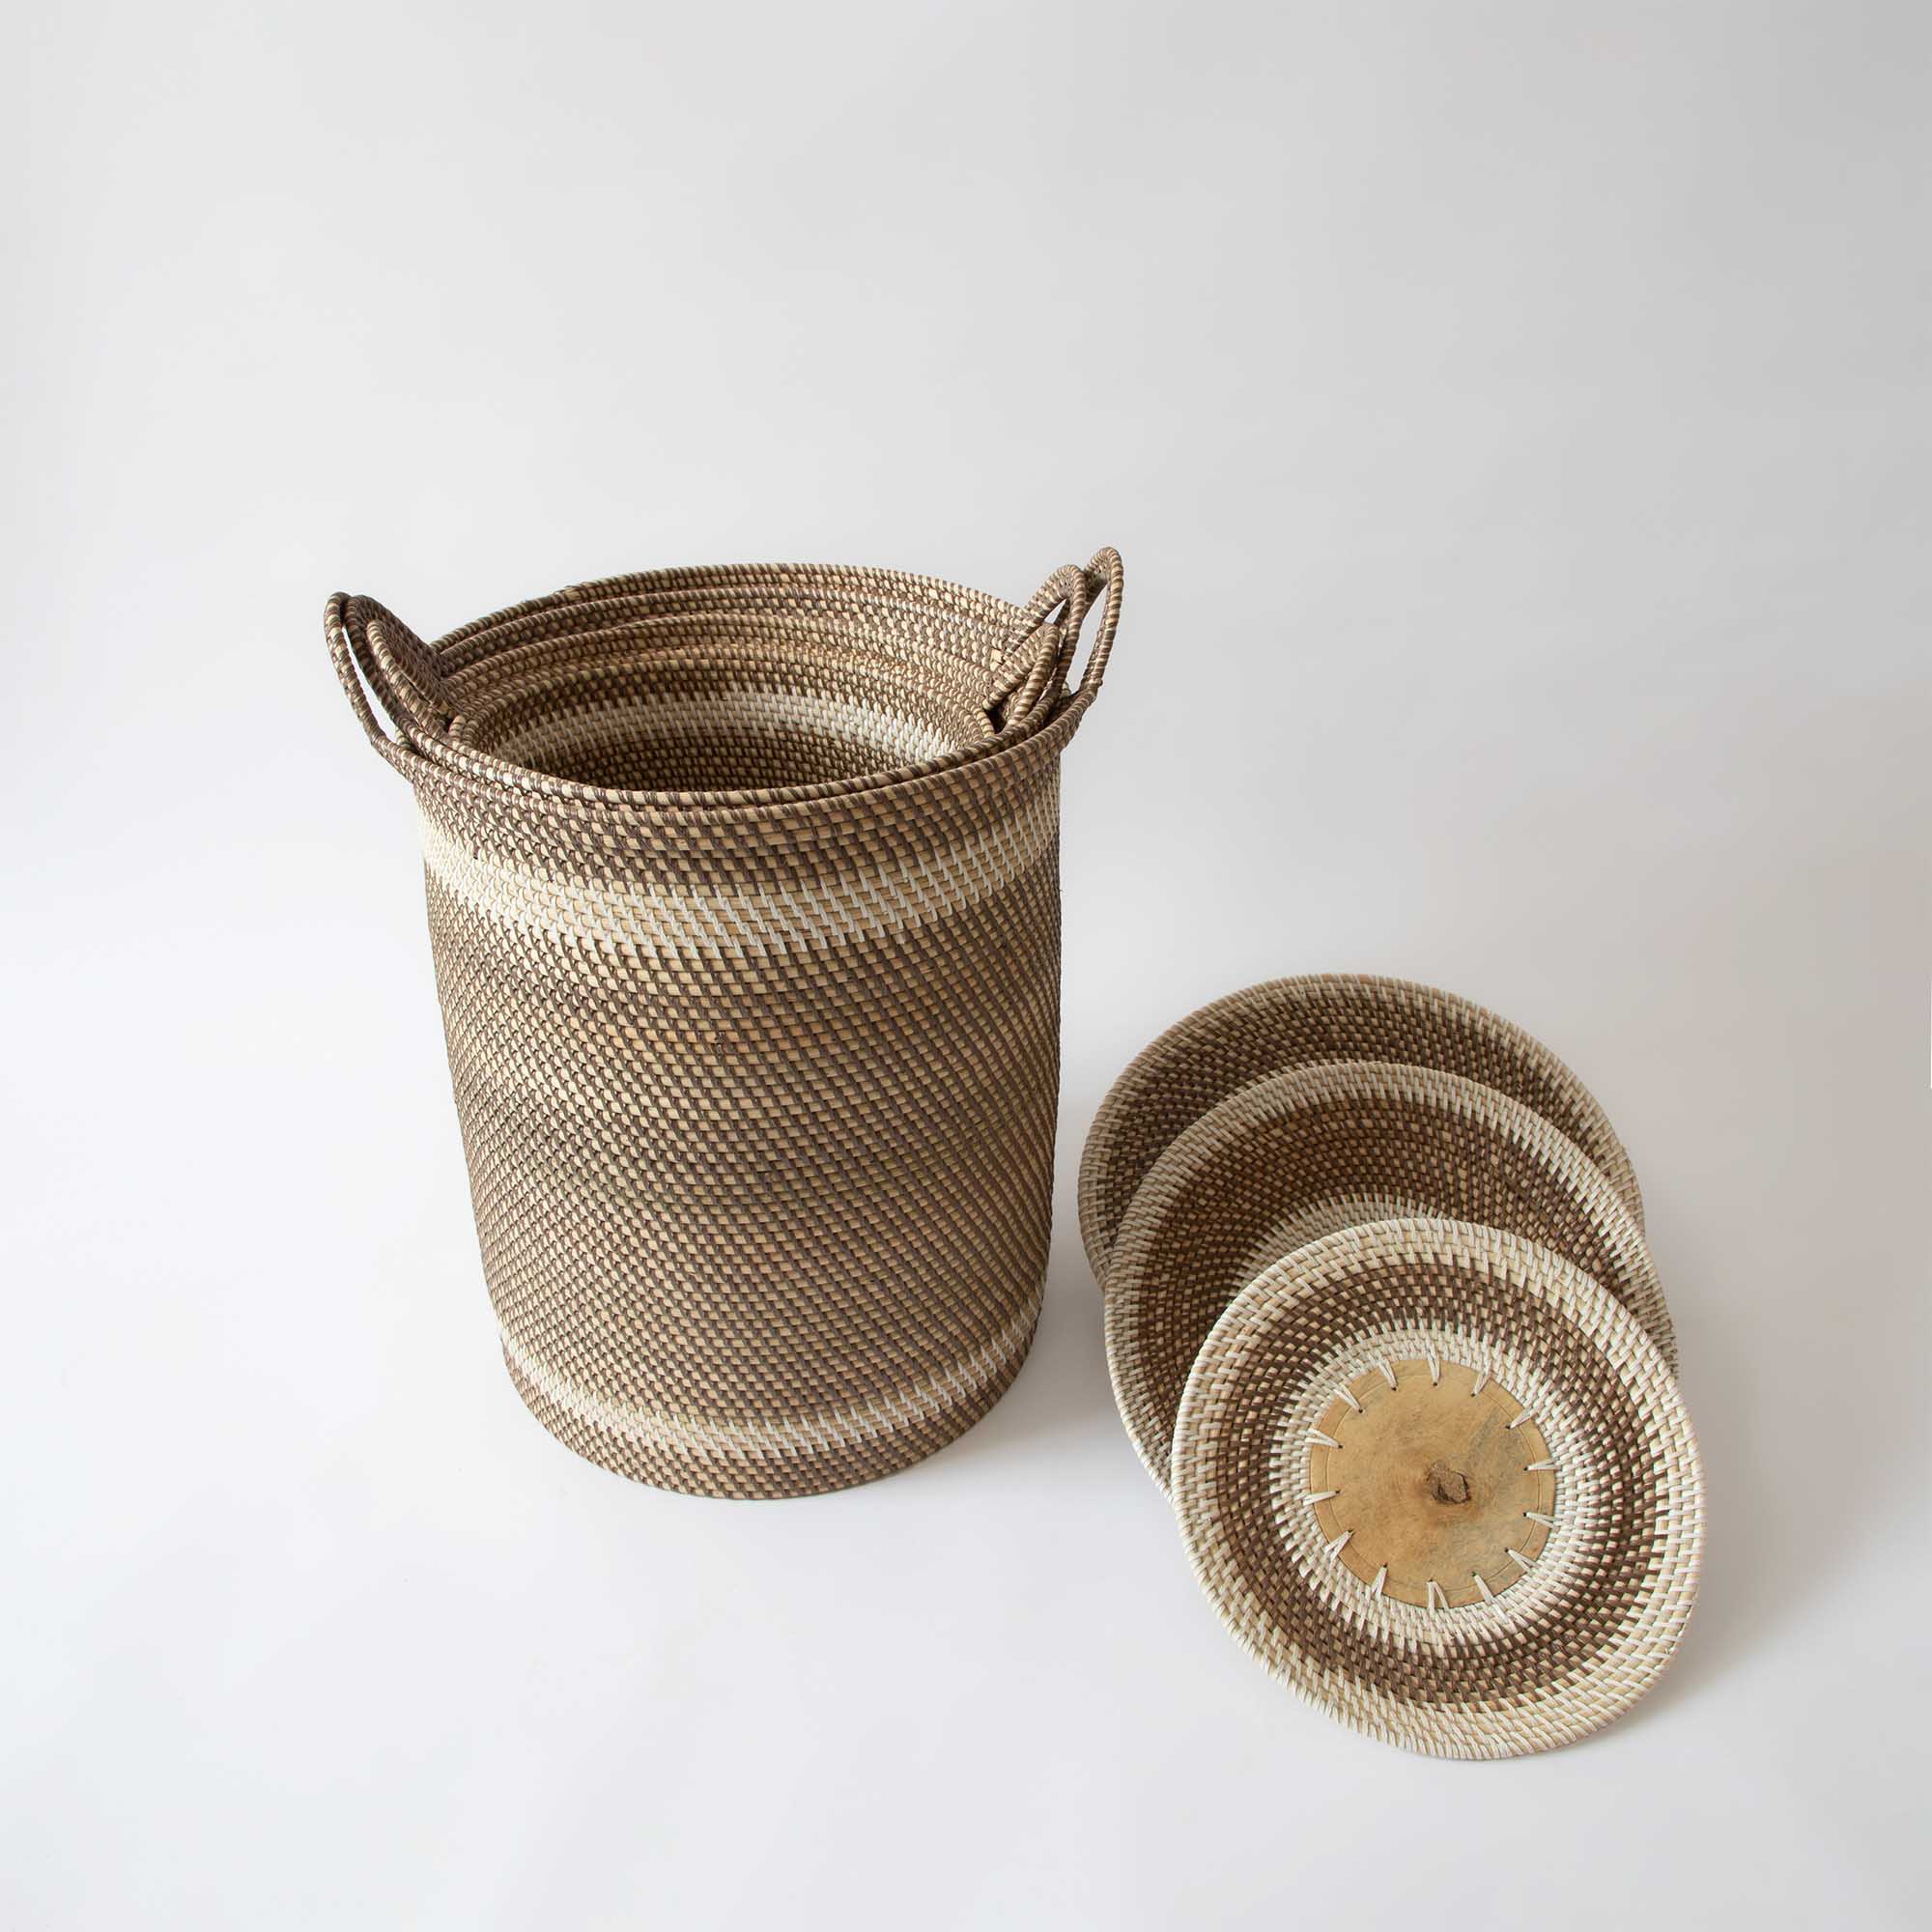 Burma Rattan Lidded Basket with Handles